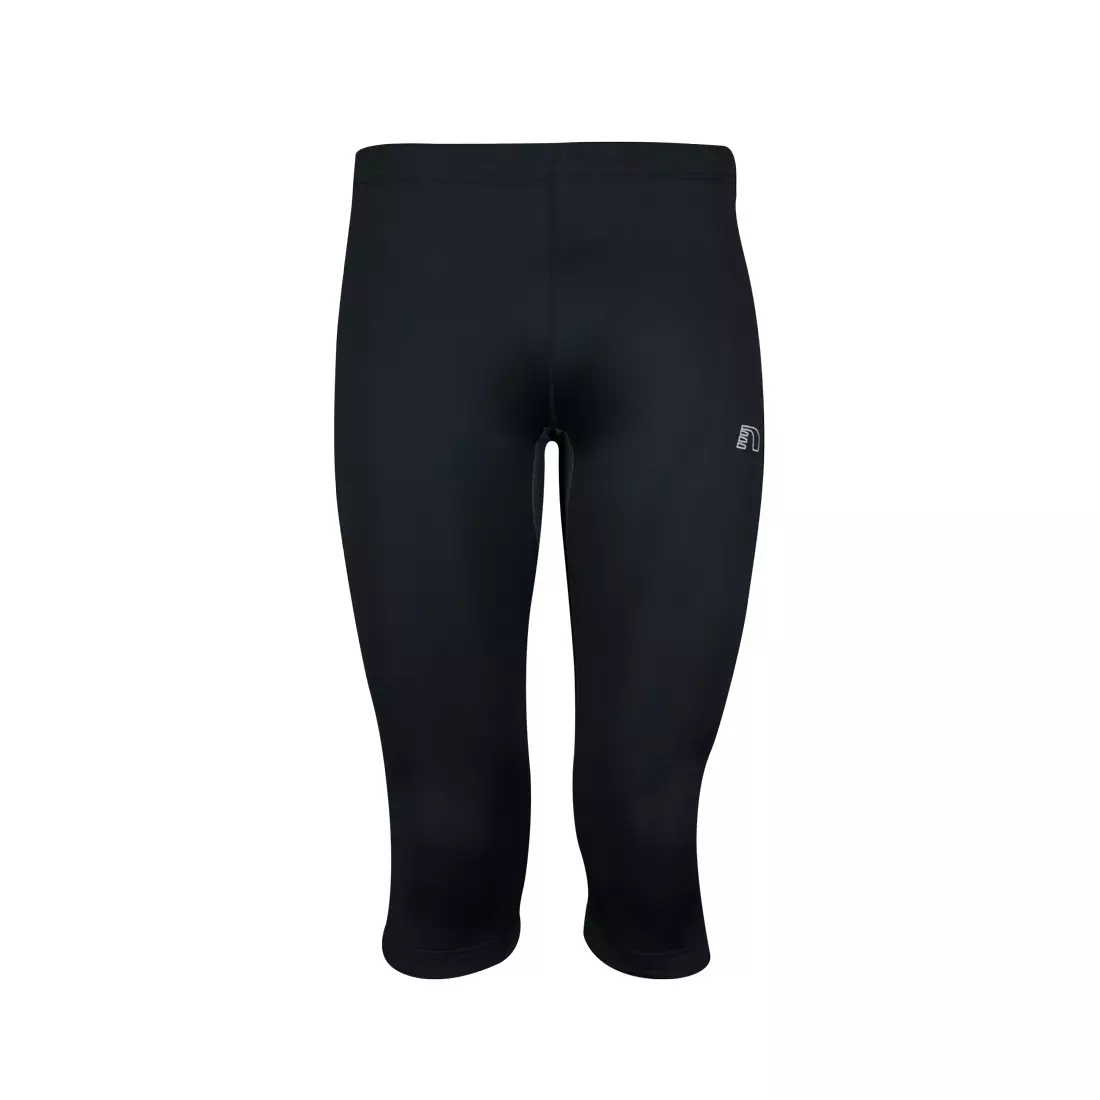 NEWLINE BASE DRY N COMFORT - women's 3/4 running shorts 13409-060